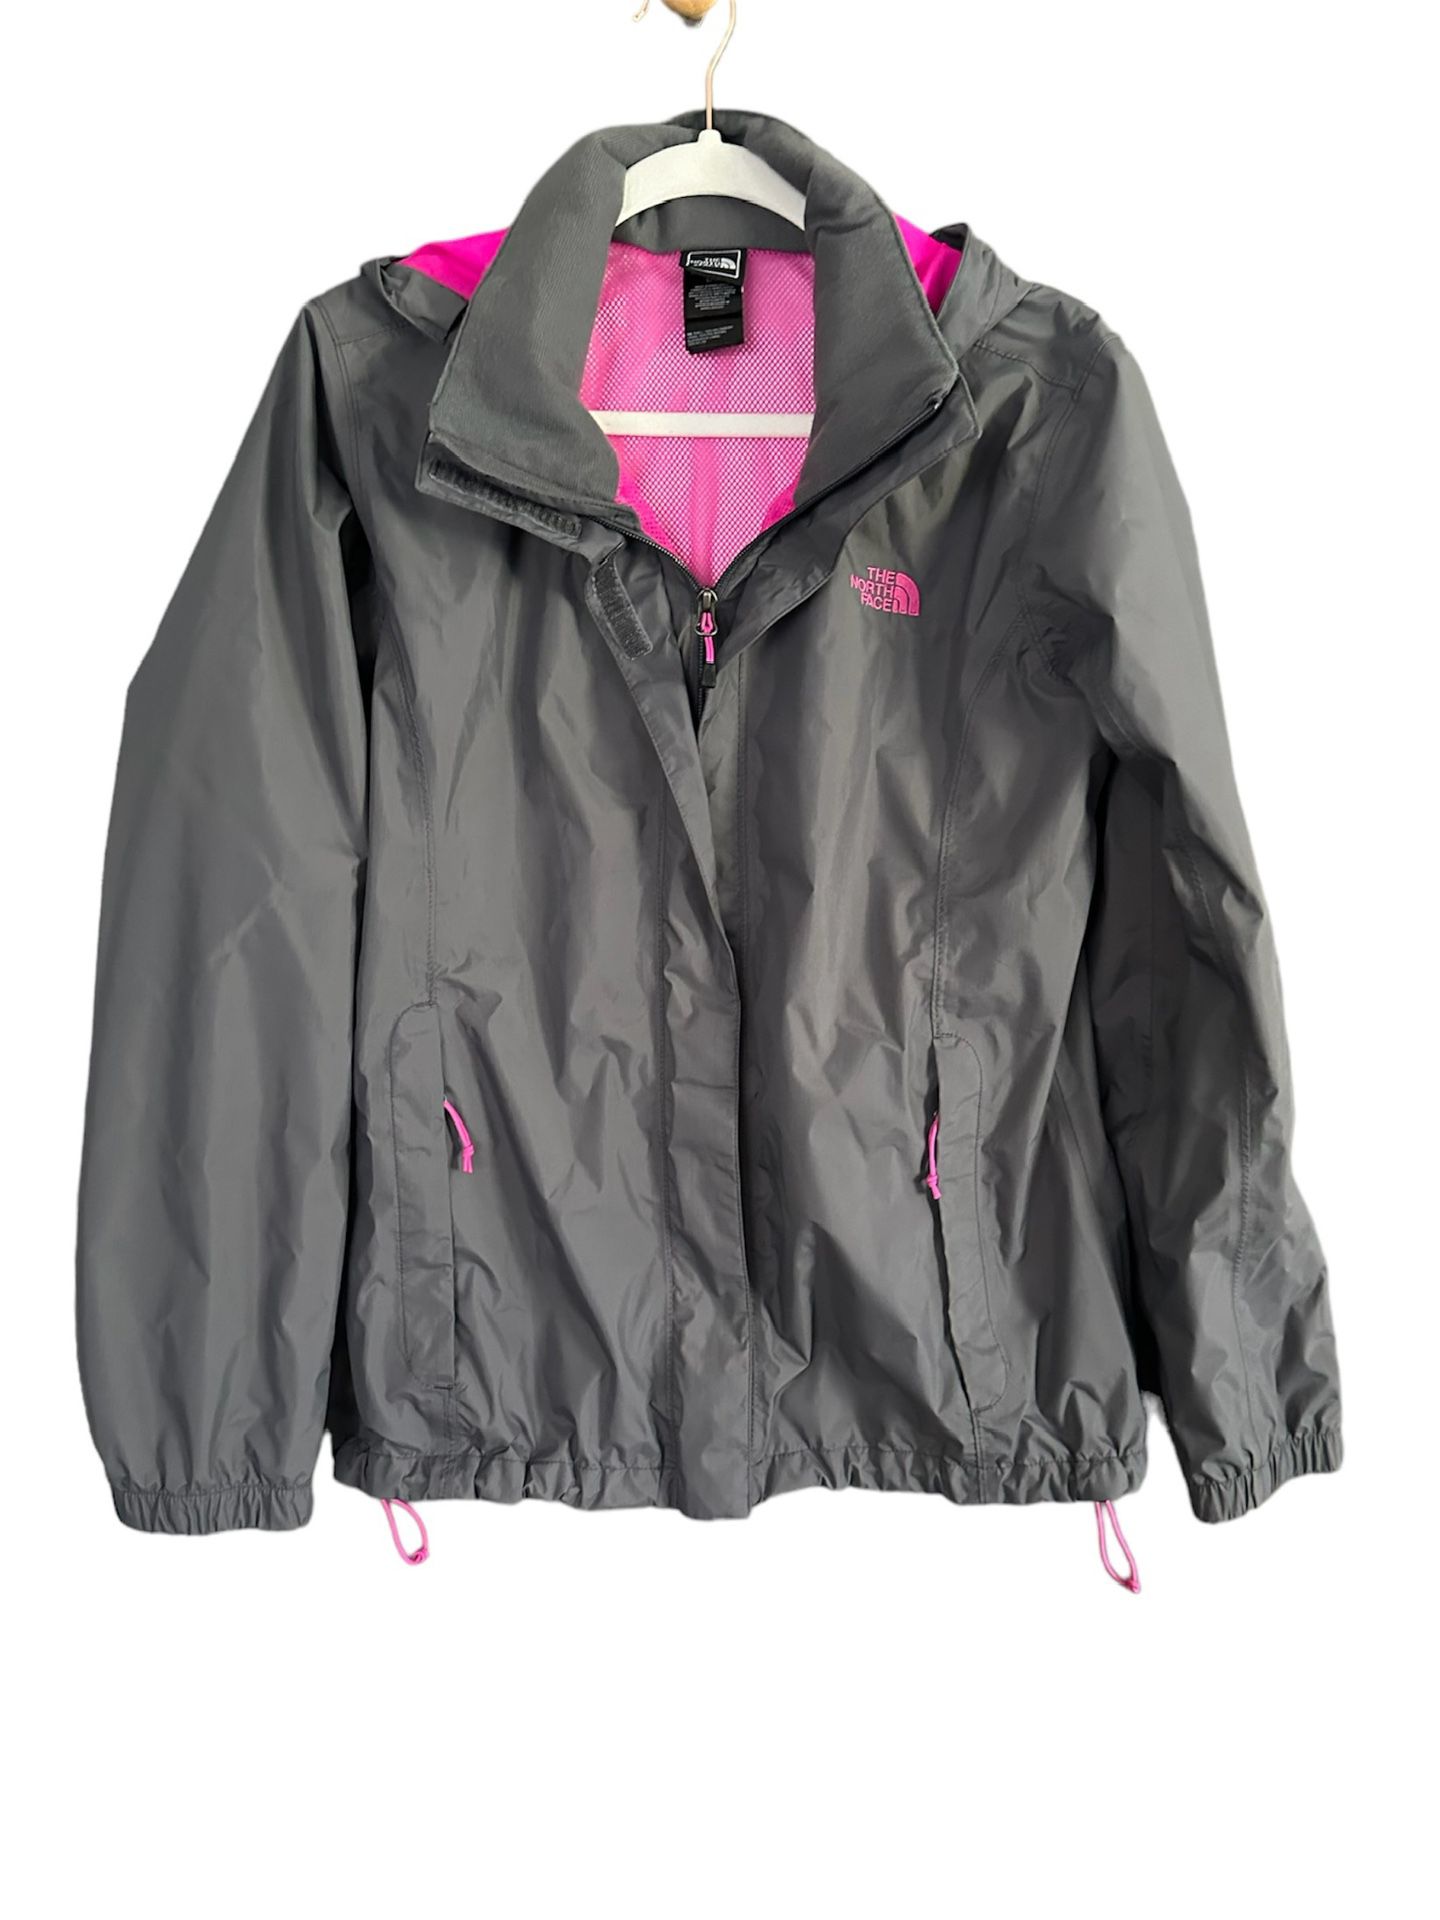 North Face Waterproof Hyvent Jacket Women’s